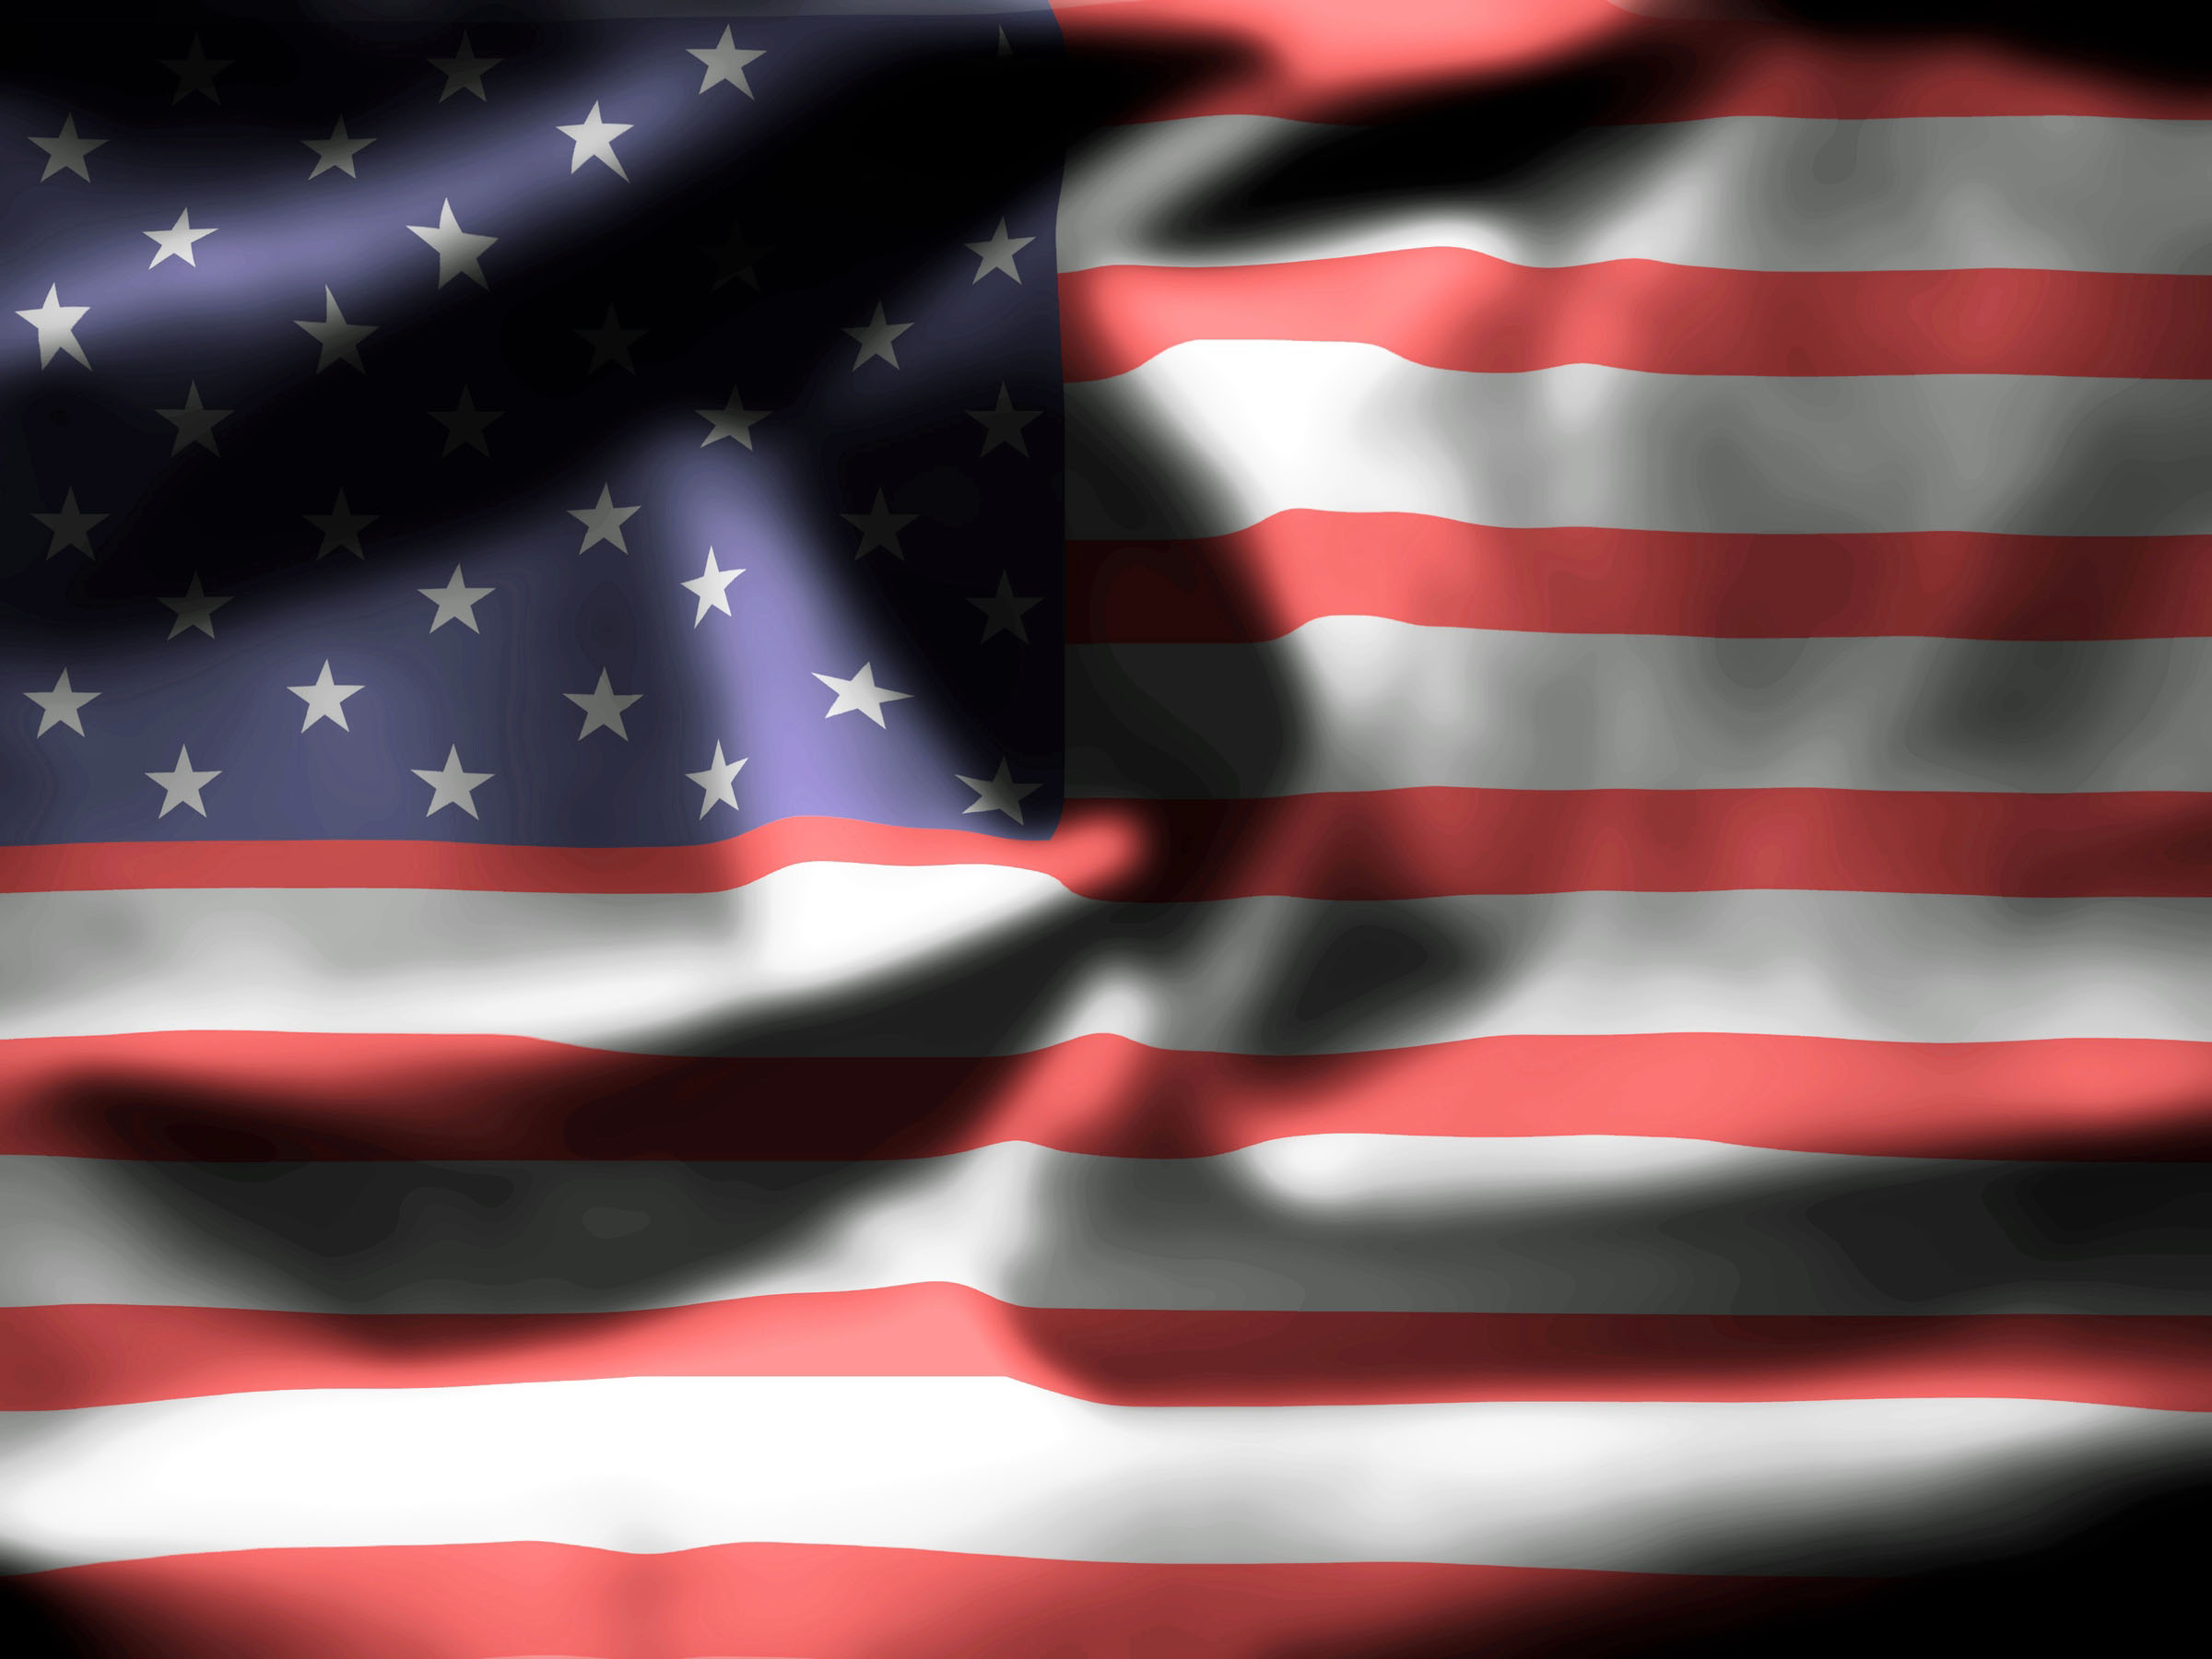 General 2400x1800 USA flag American flag digital art